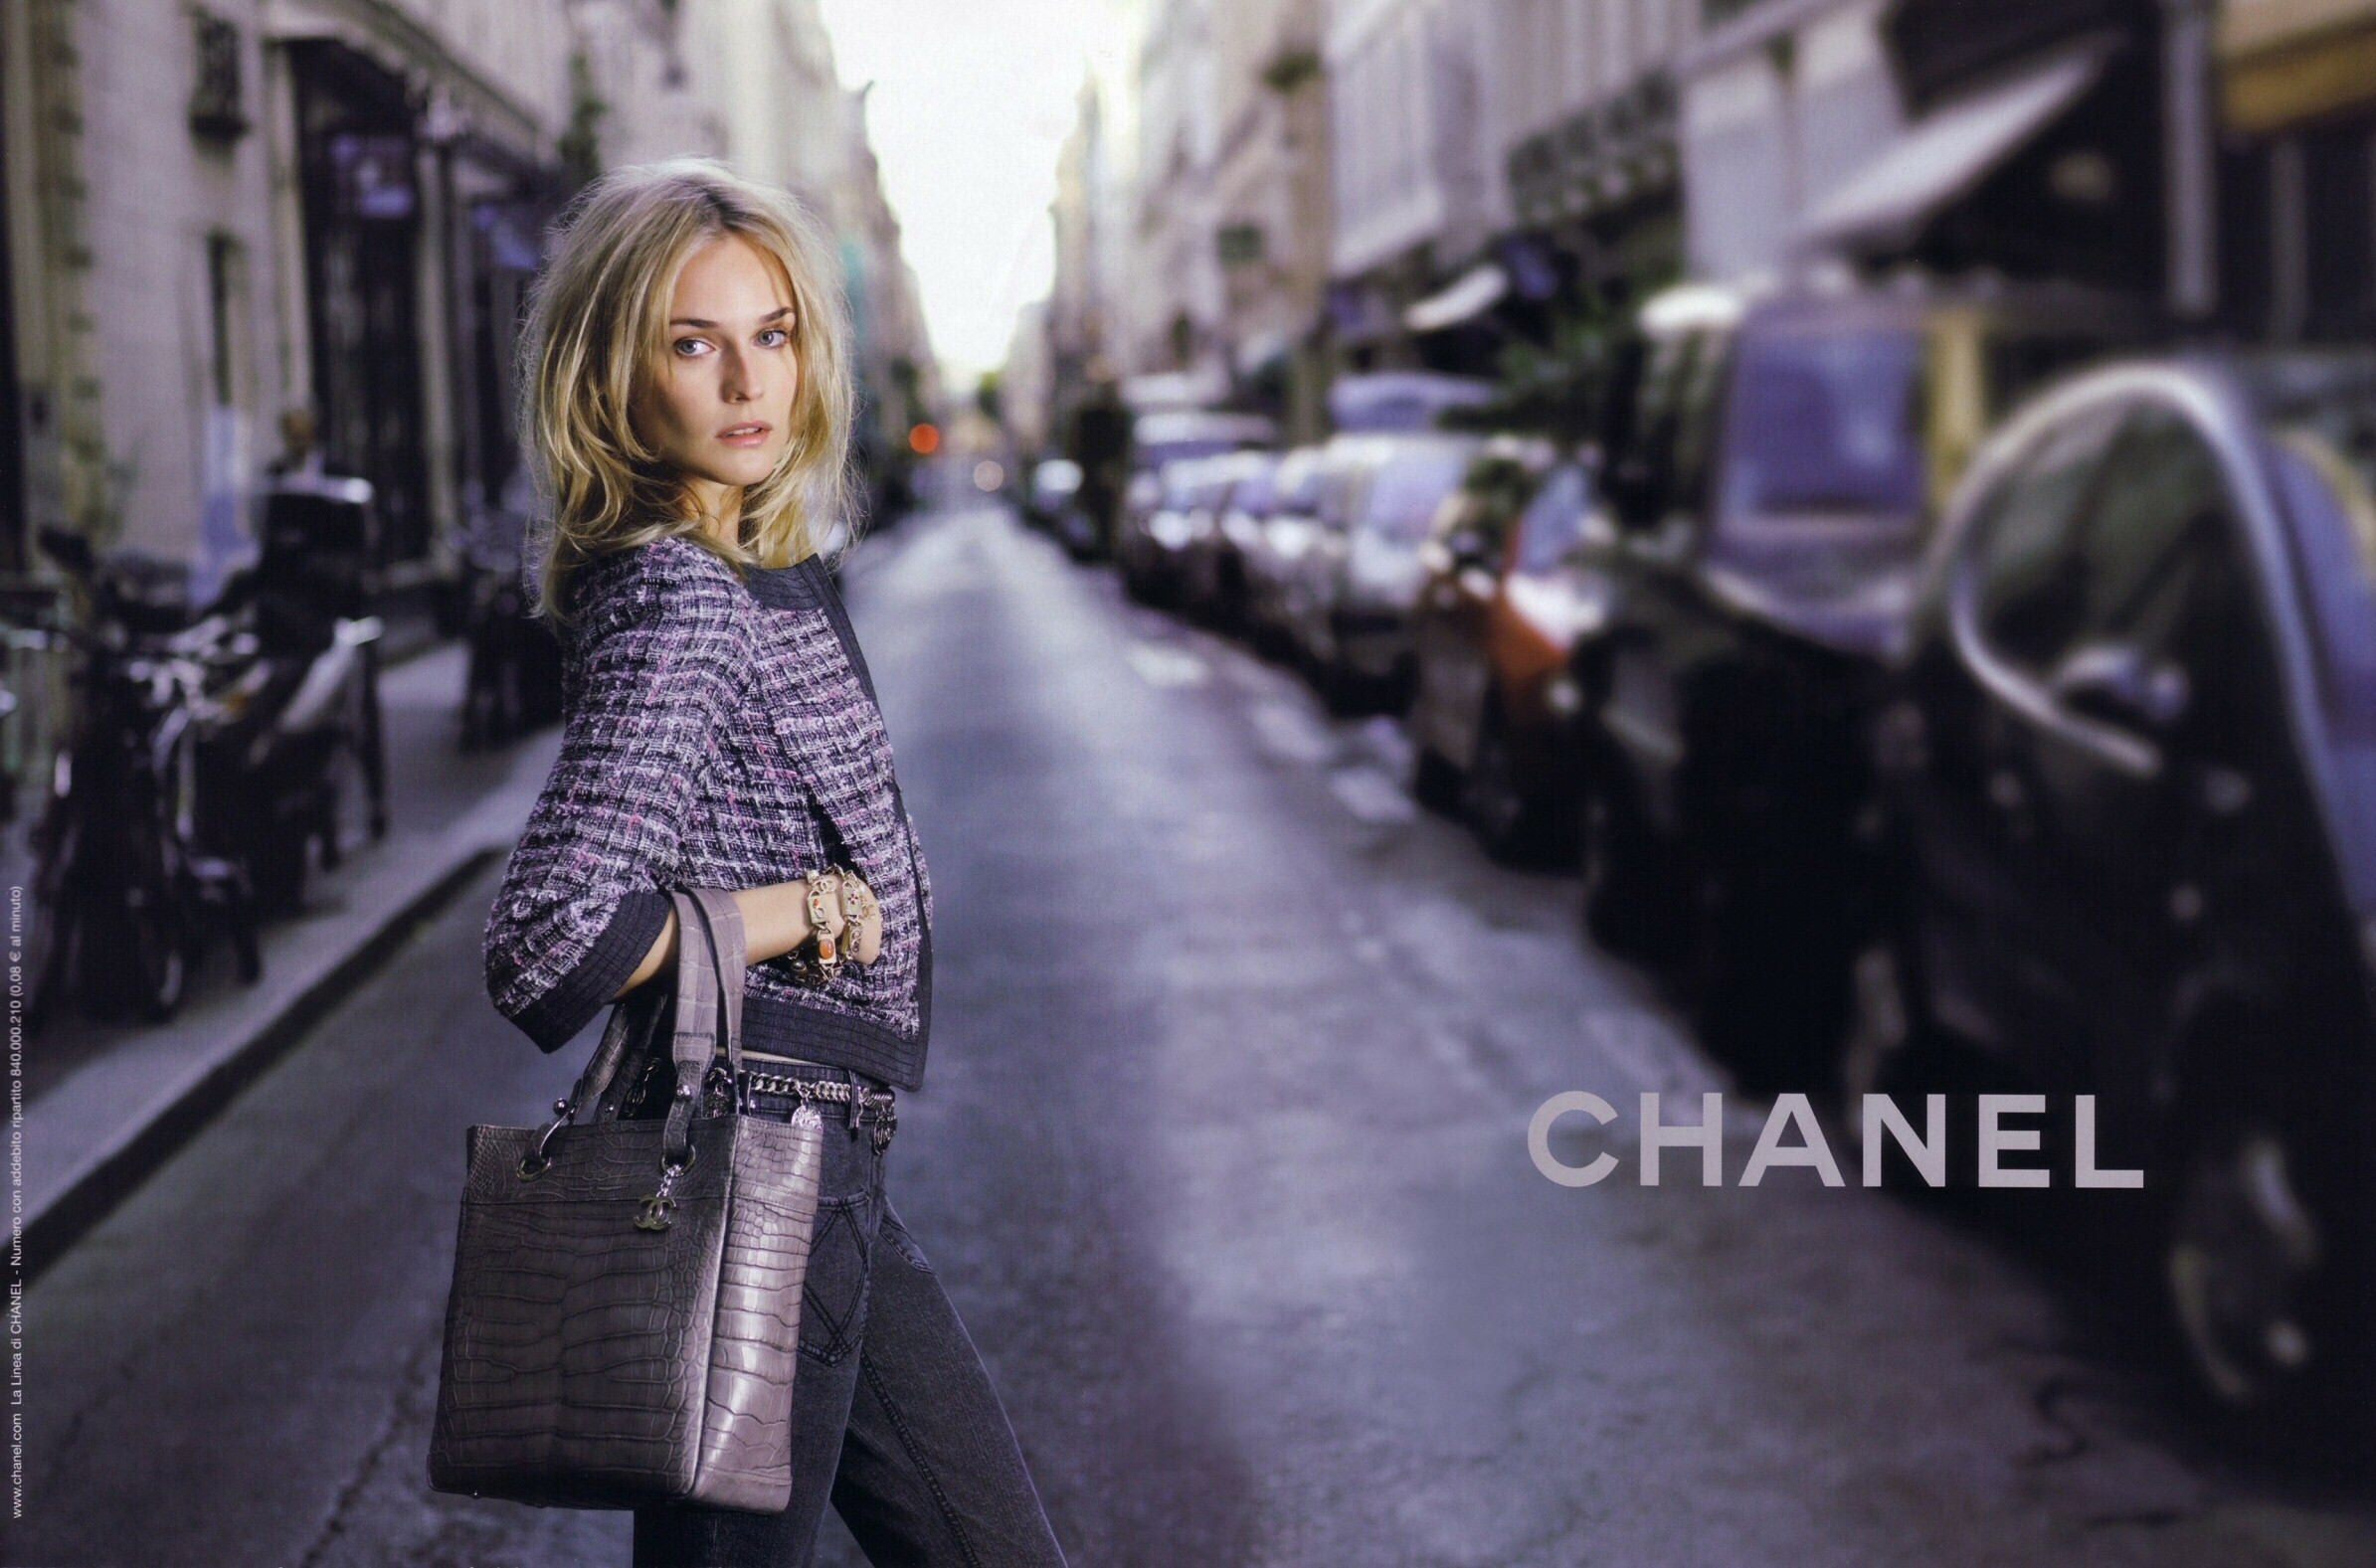 Chanel: Actress, Model, Fashion, Diane Kruger, Purse, Brand. 2390x1580 HD Wallpaper.